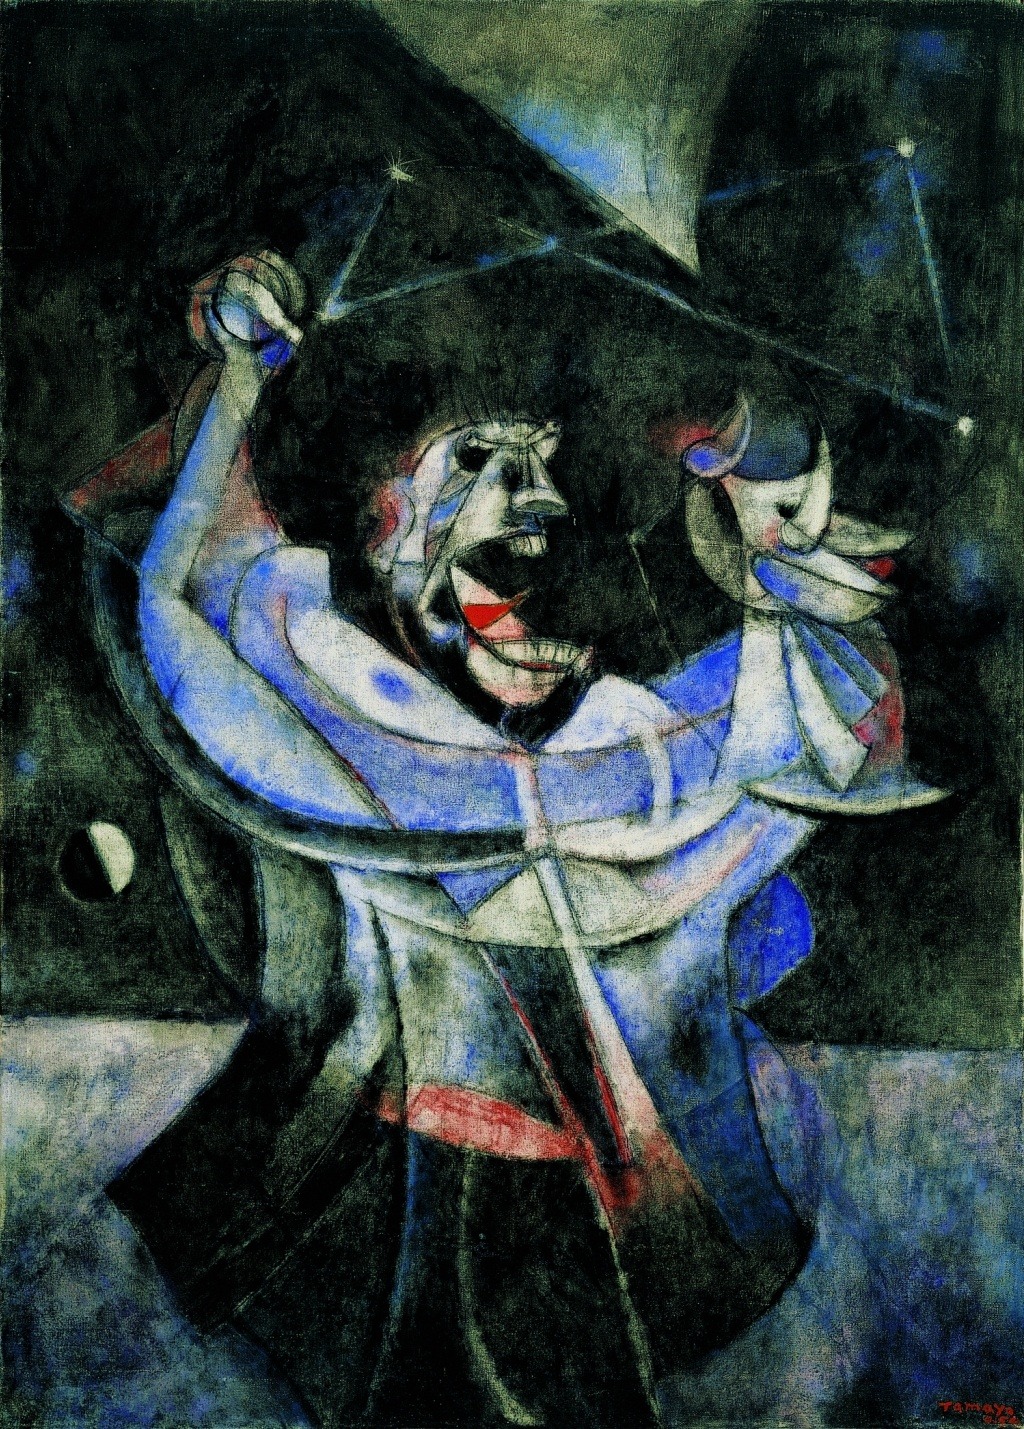 Rufino Tamayo (Mexican, 1899-1991)
Cosmic Terror, 1947
Oil on canvas, 106 x 76.2 cm